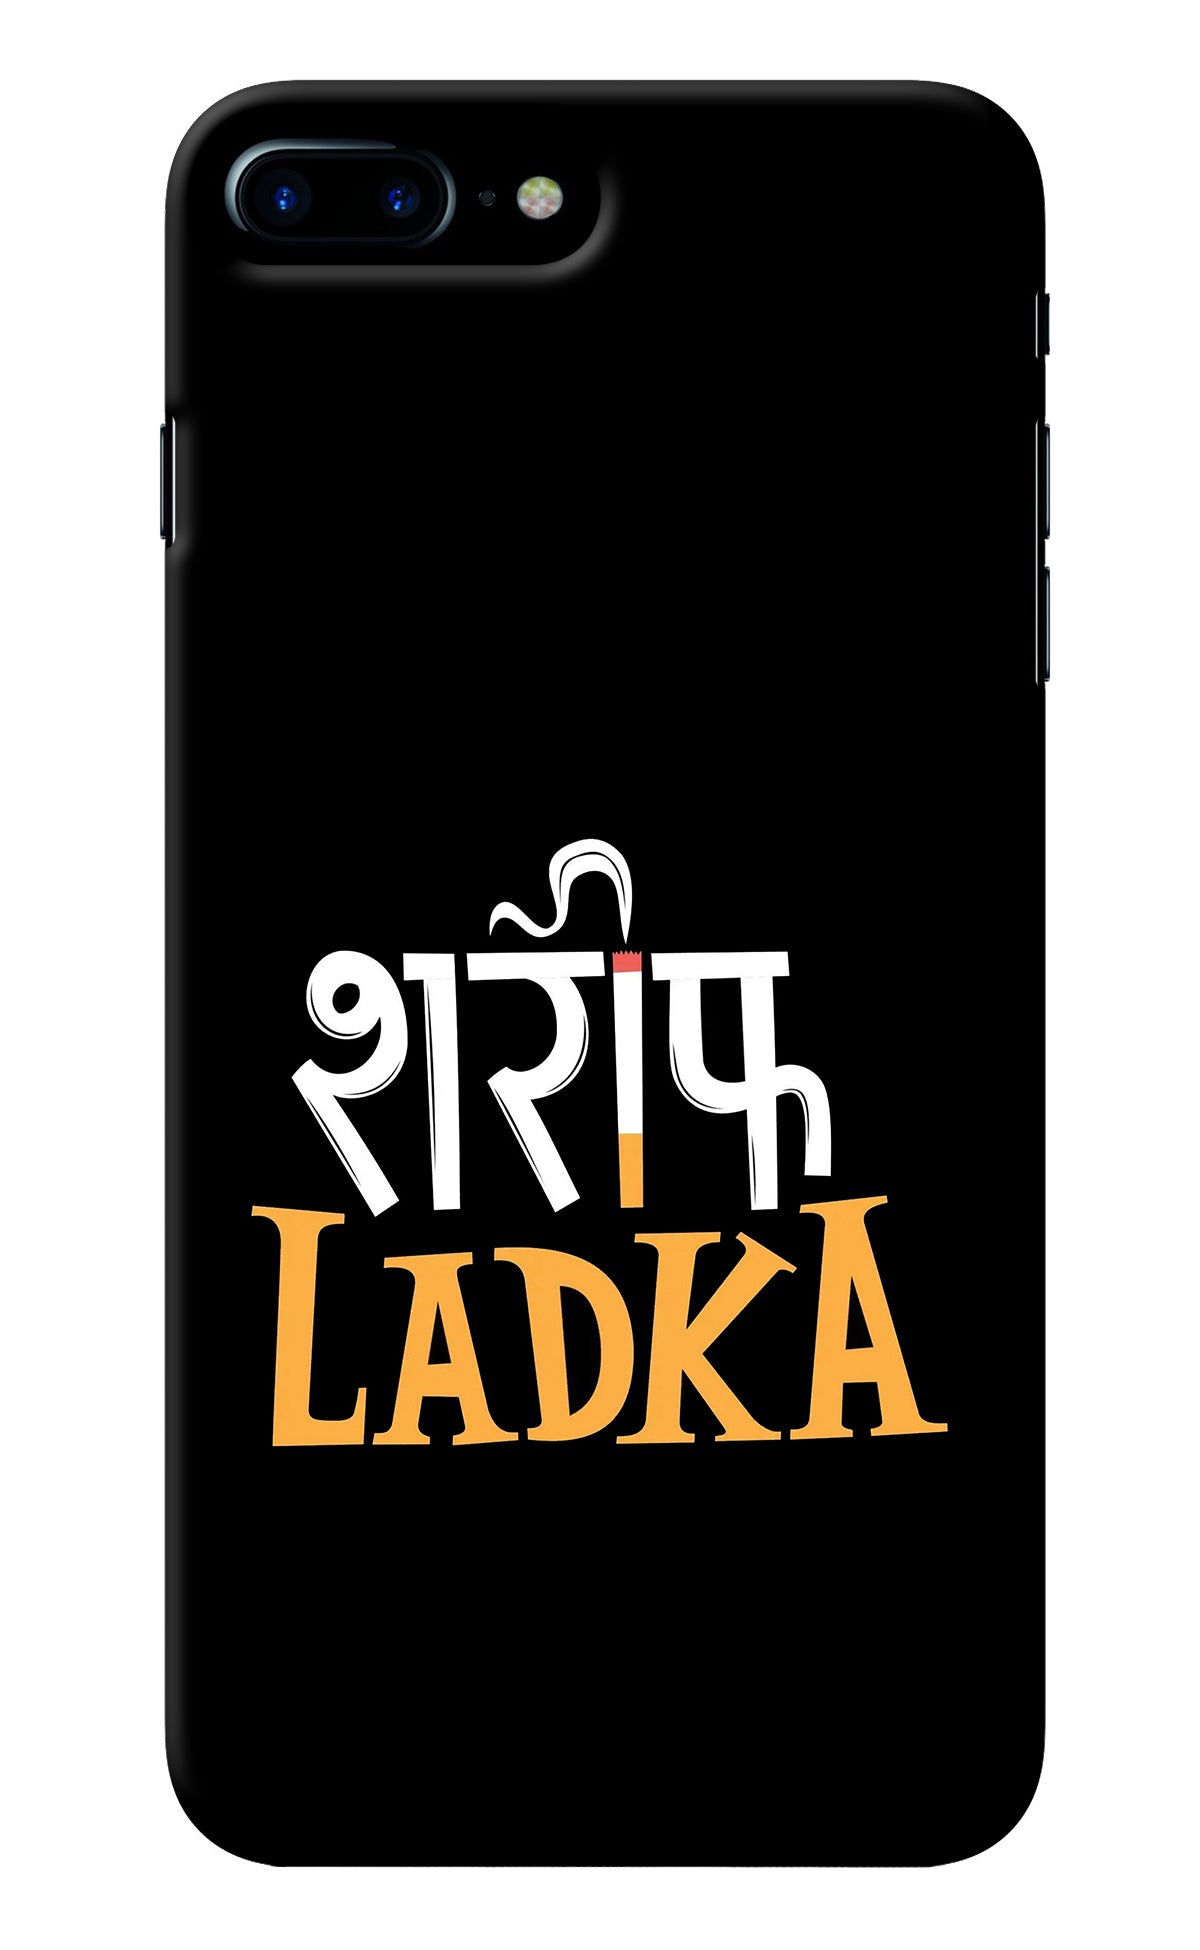 Shareef Ladka iPhone 8 Plus Back Cover